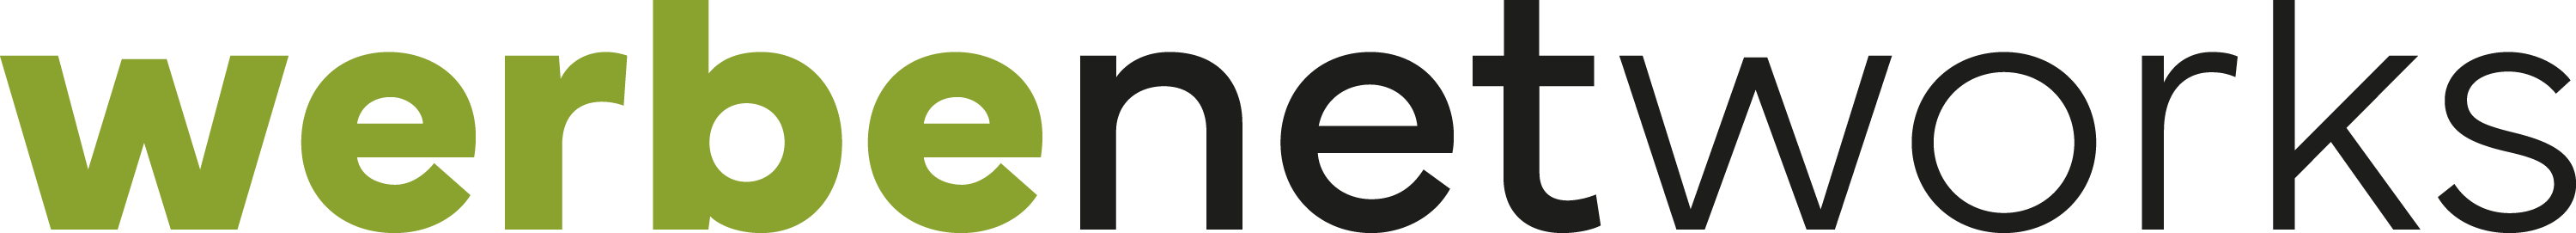 Werbenetworks-Logo-Optimiert